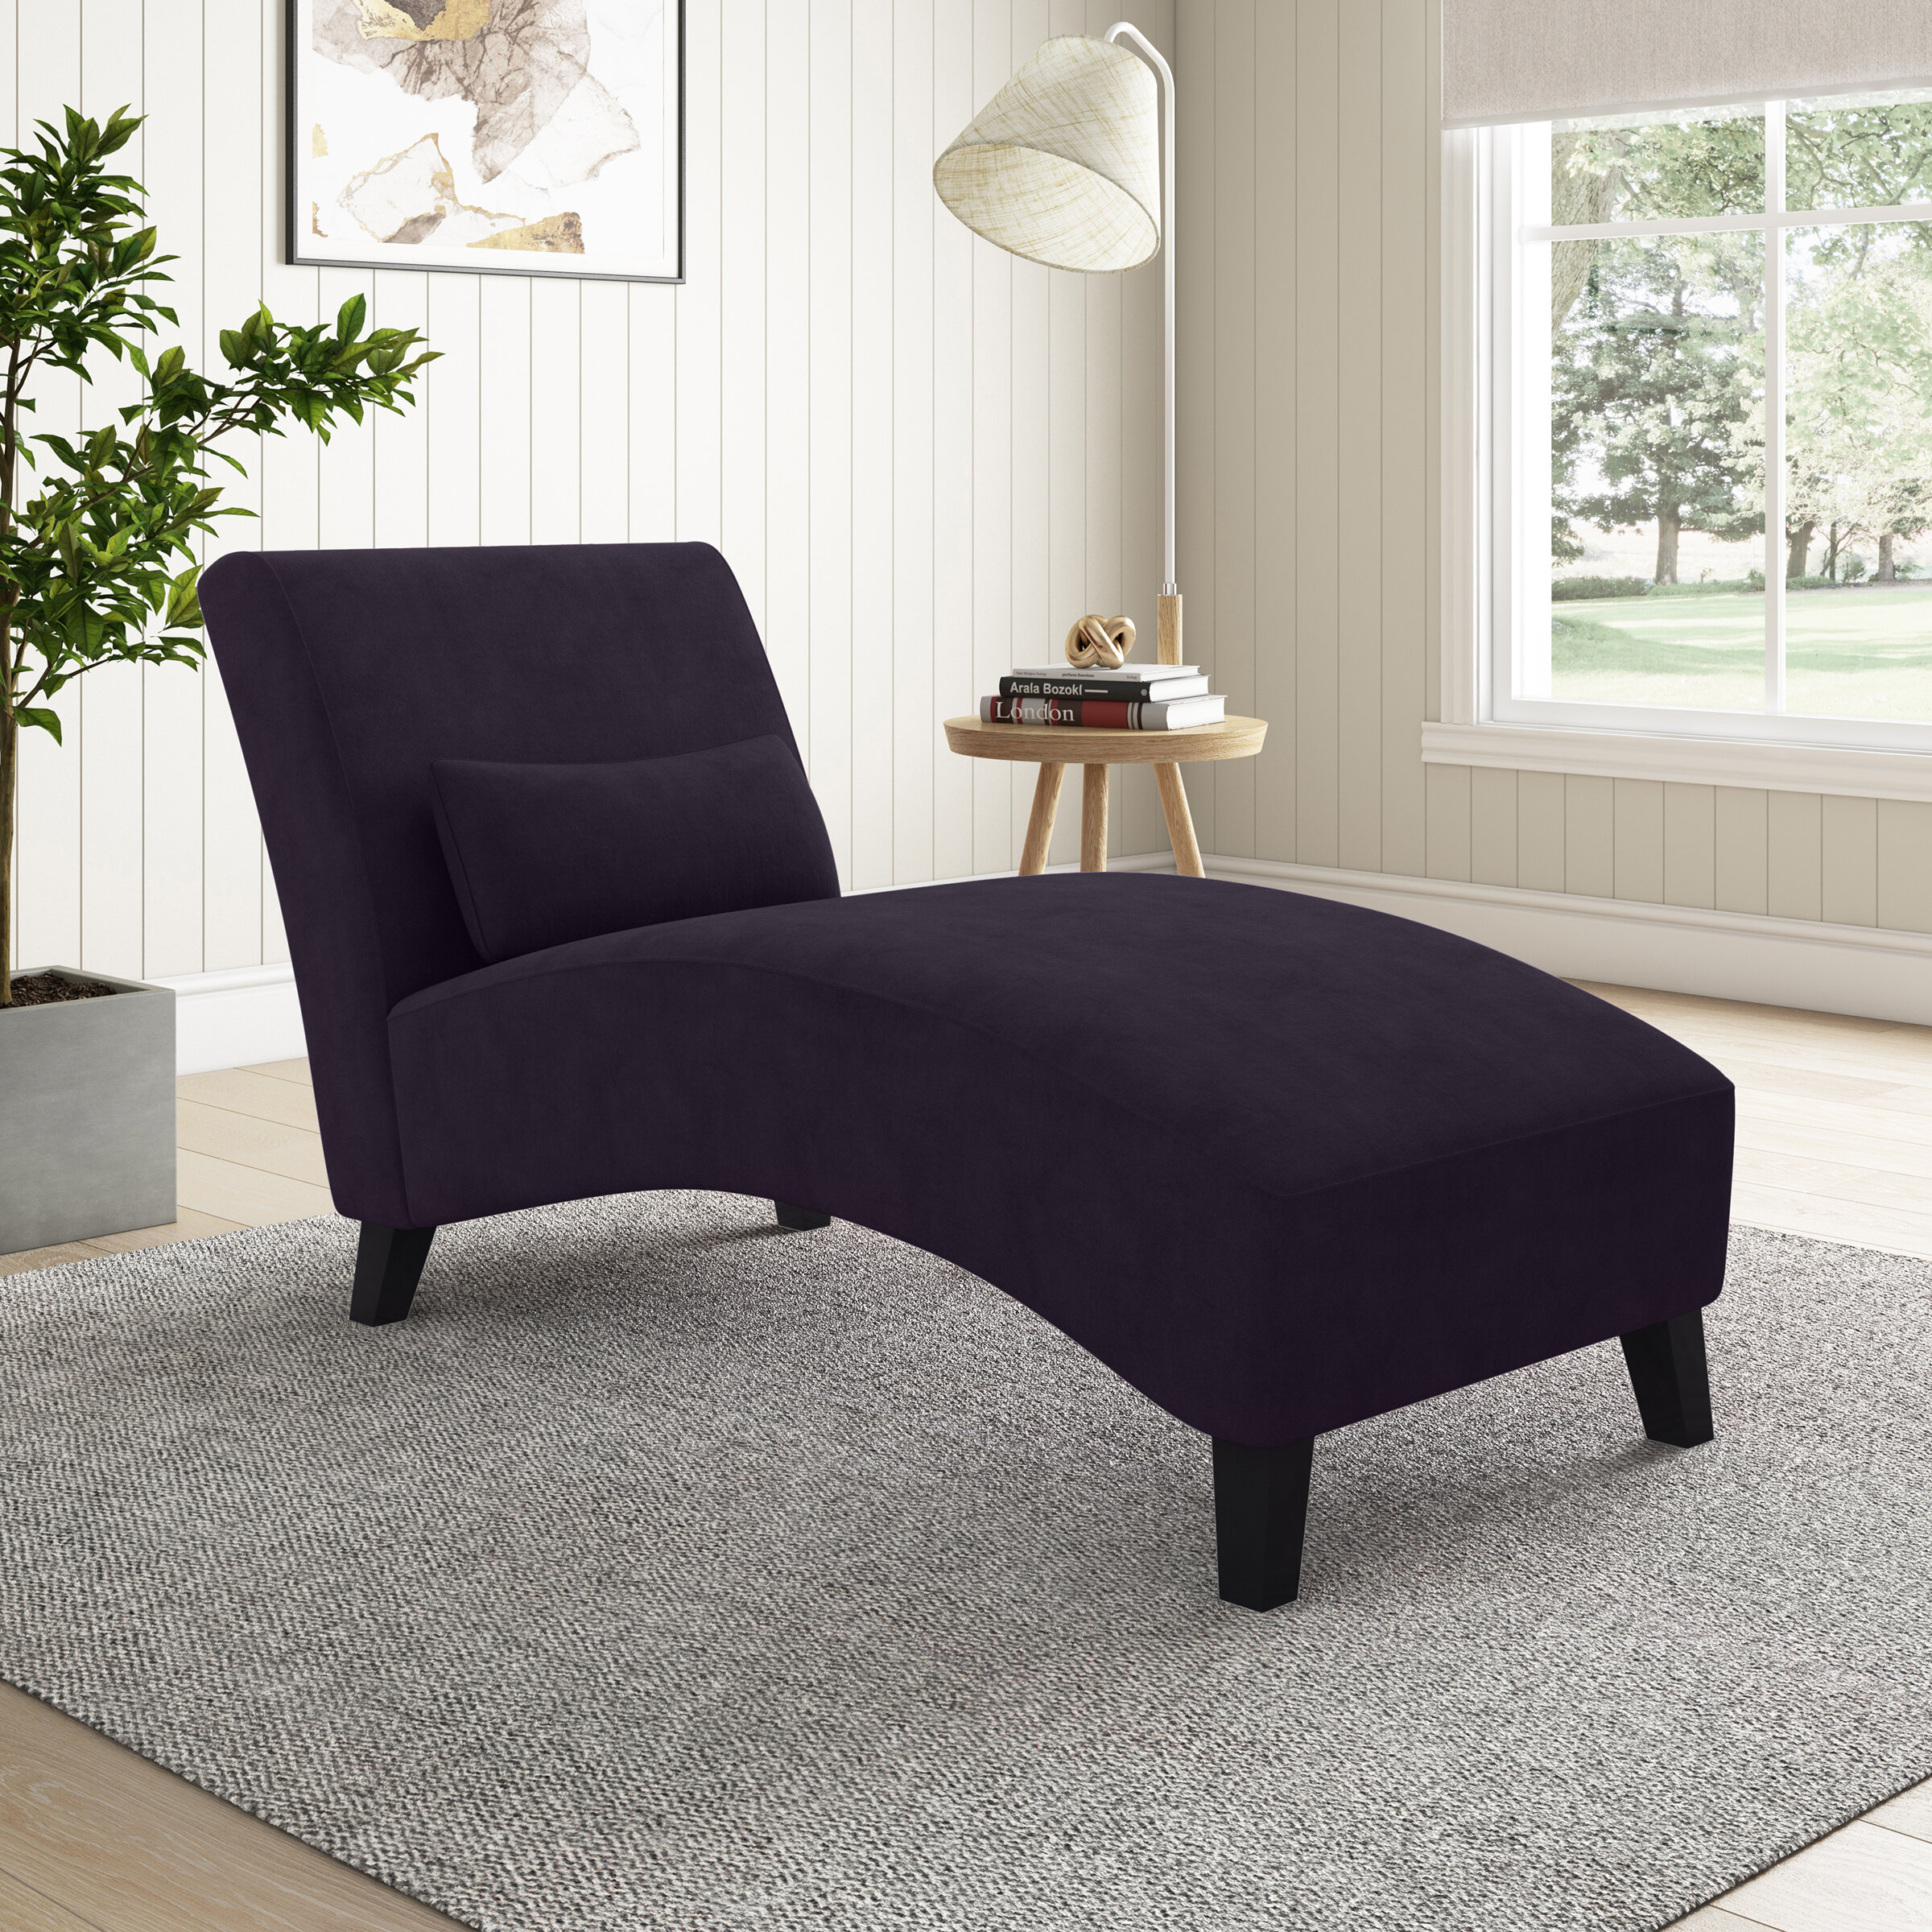 Verdi Upholstered Chaise Lounge